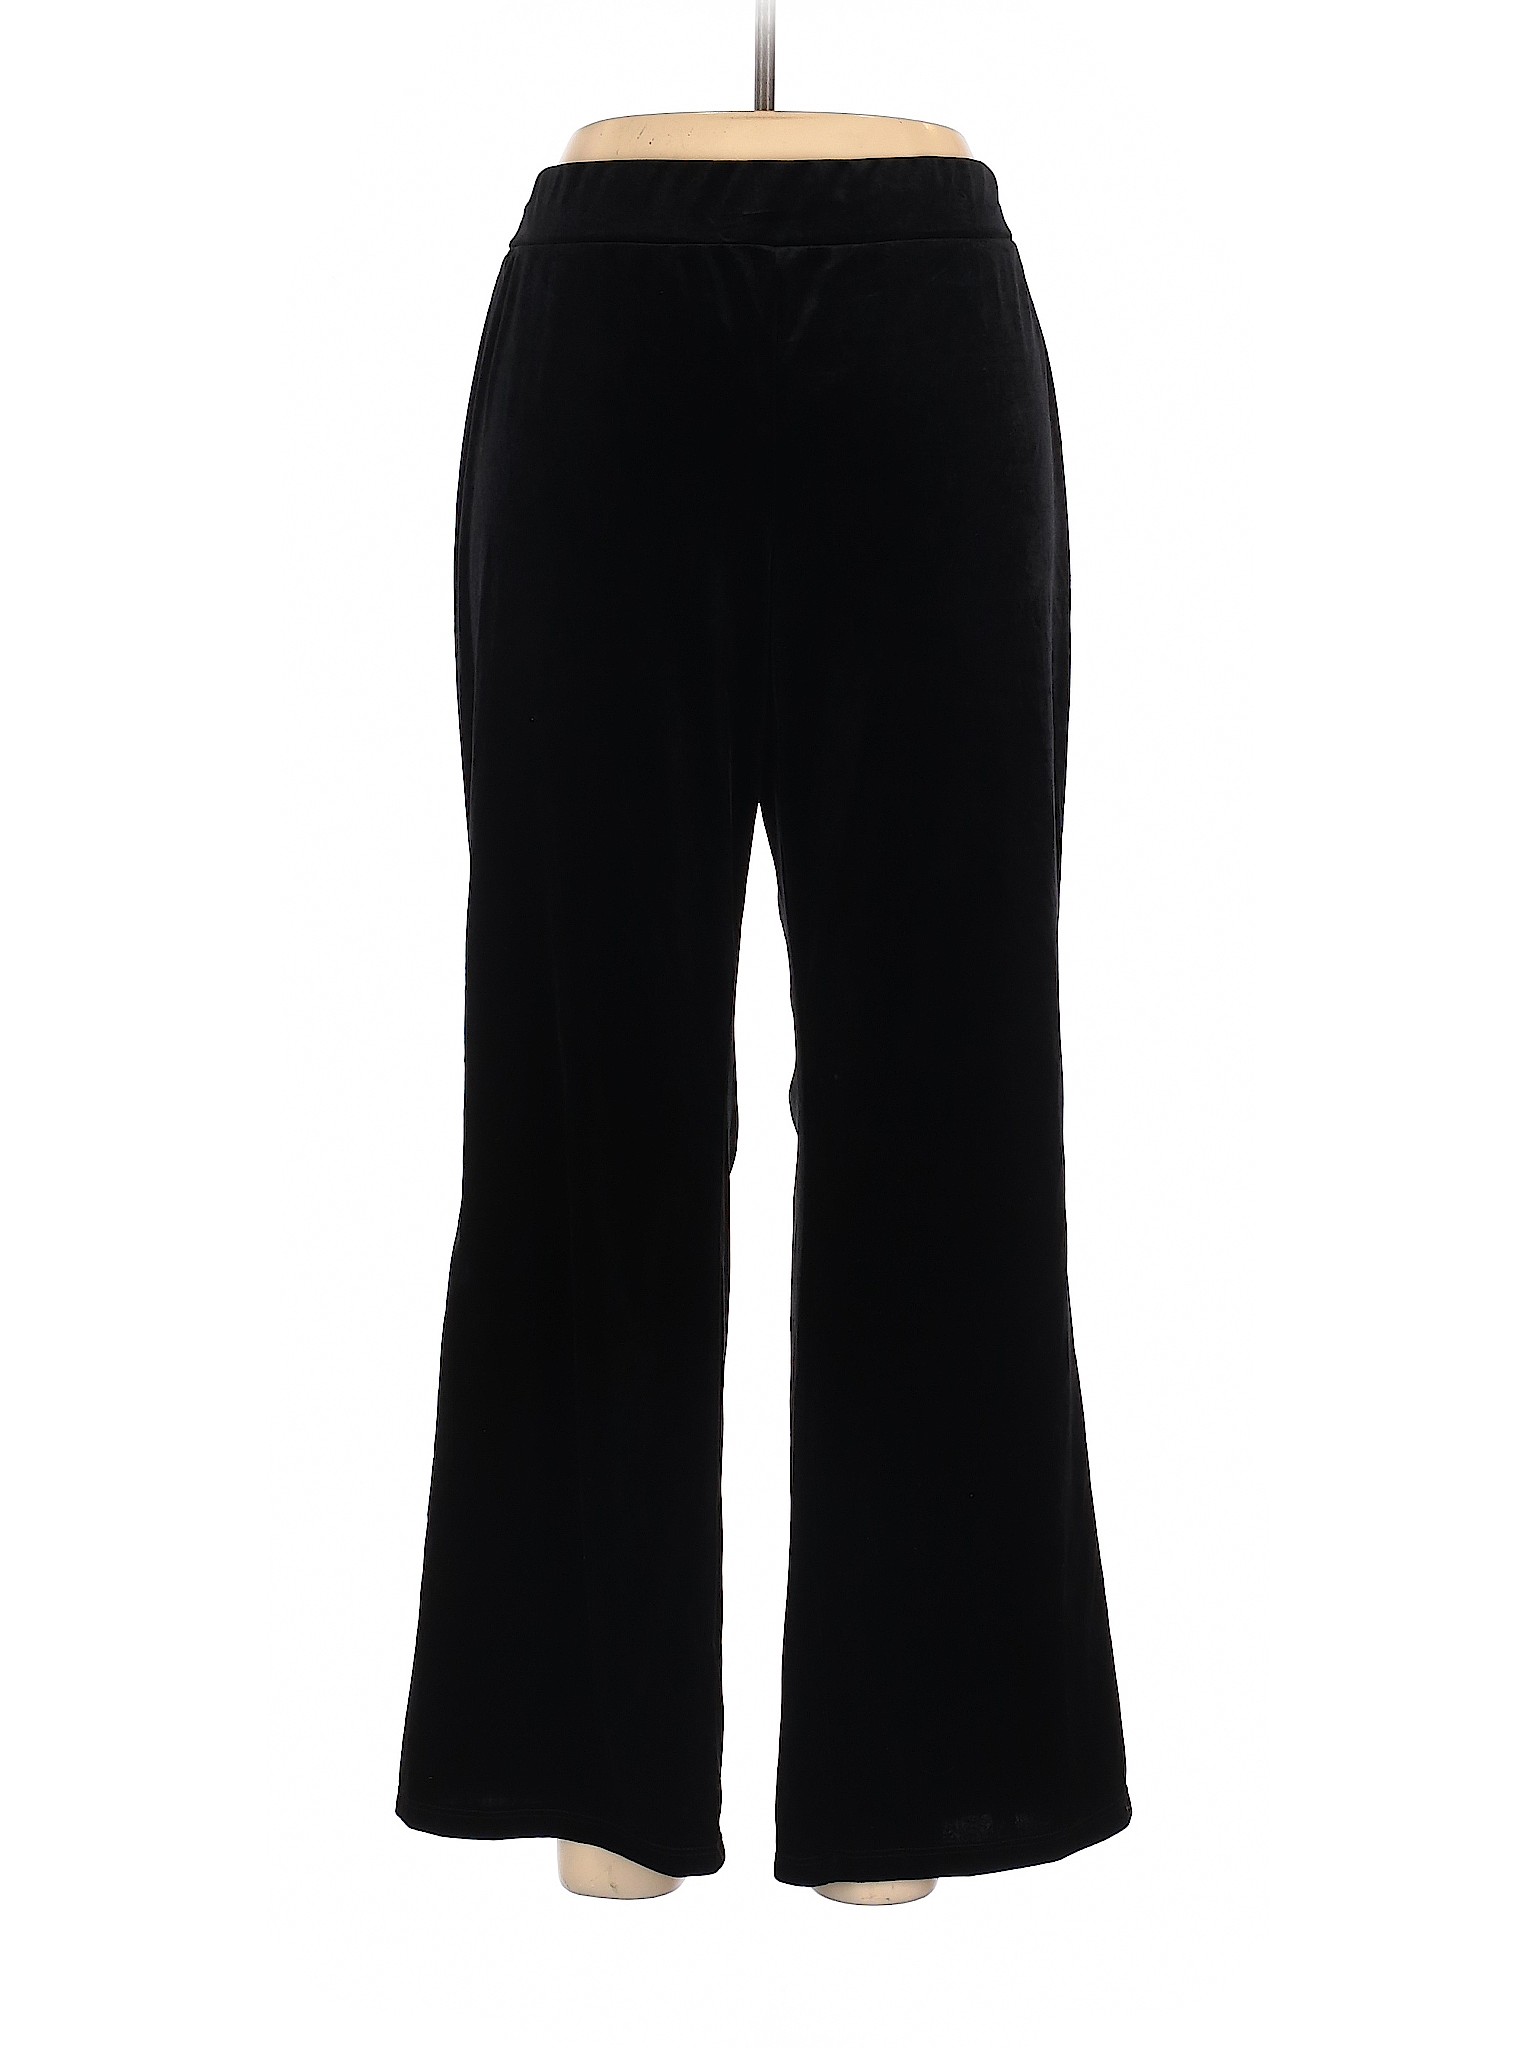 Melissa Paige Women Black Velour Pants XL Petites | eBay